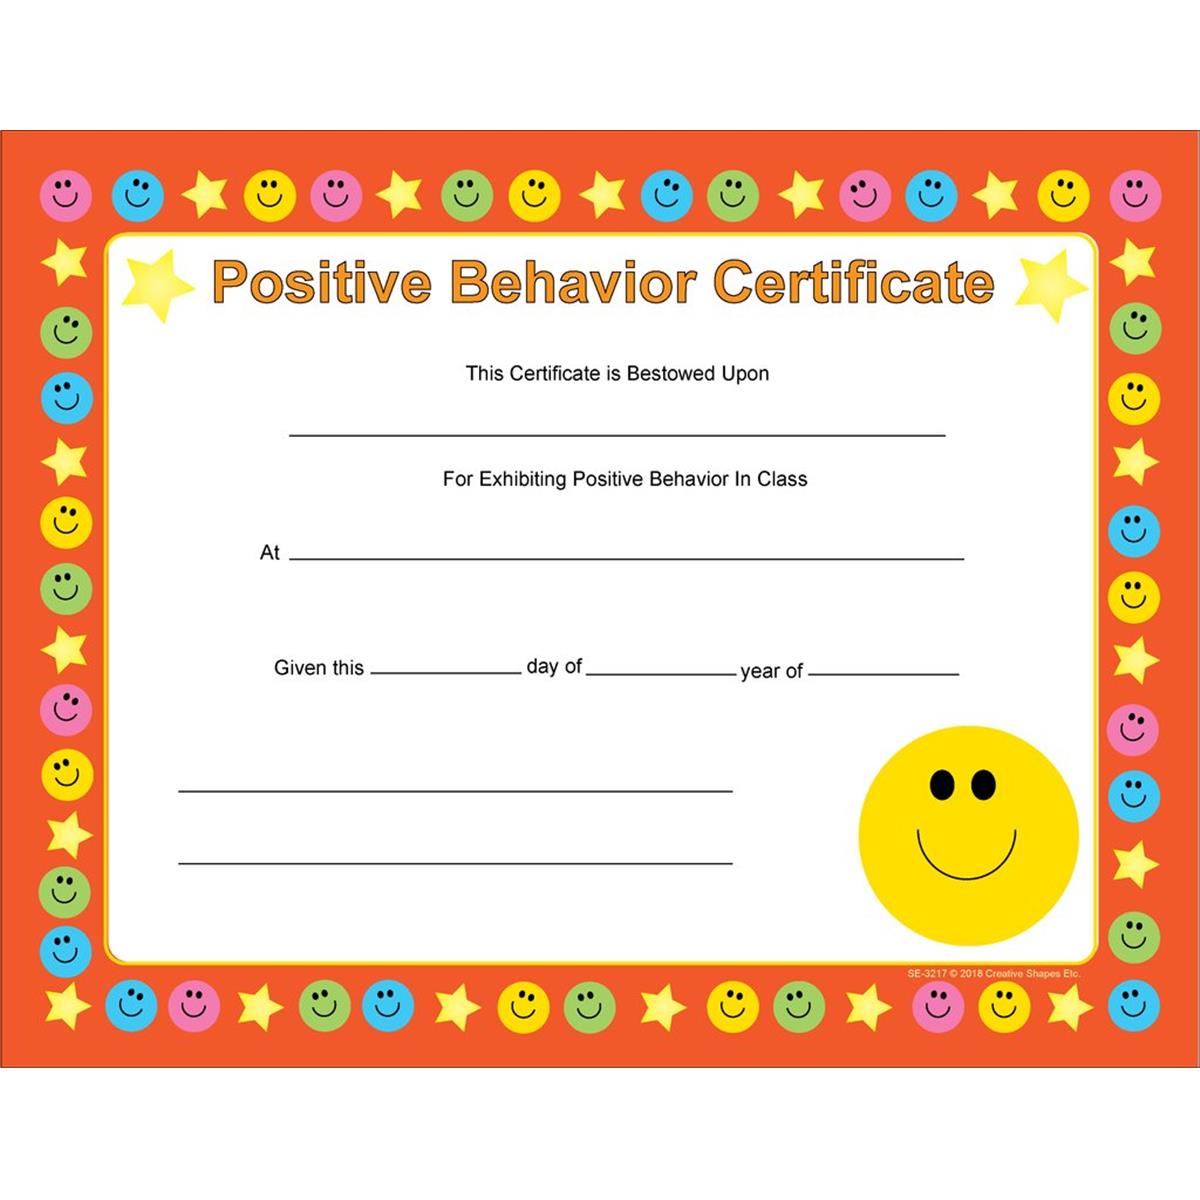 Se-3217 8.5 X 11 In. Positive Behavior Certificate - 30 Sheets Per Pack